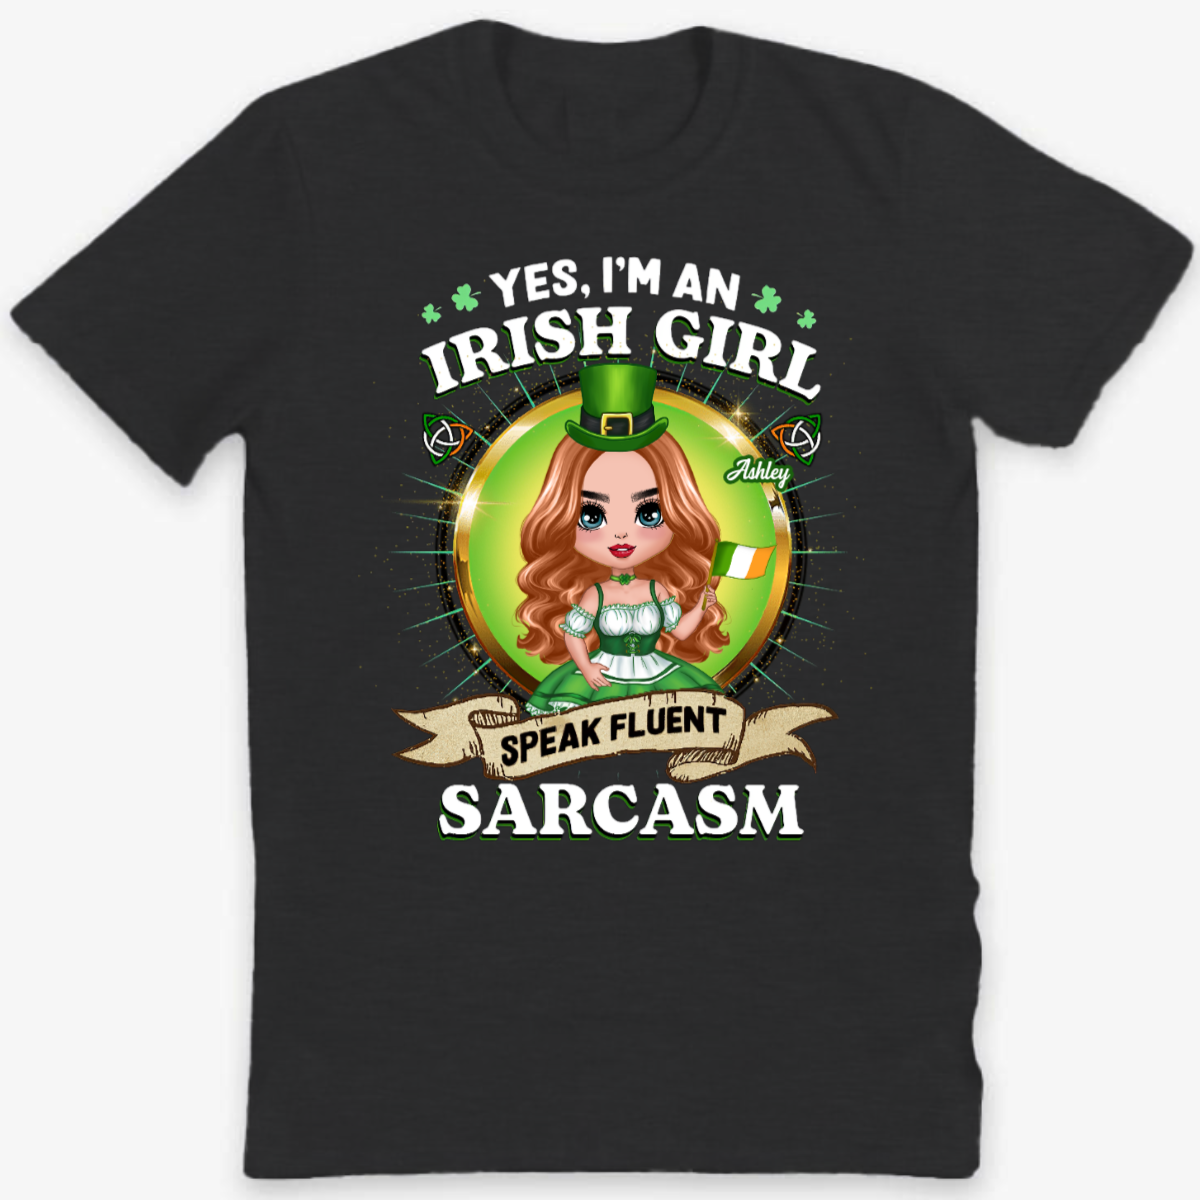 Irish Girl Speaks Fluent Sarcasm Personalized Shirt